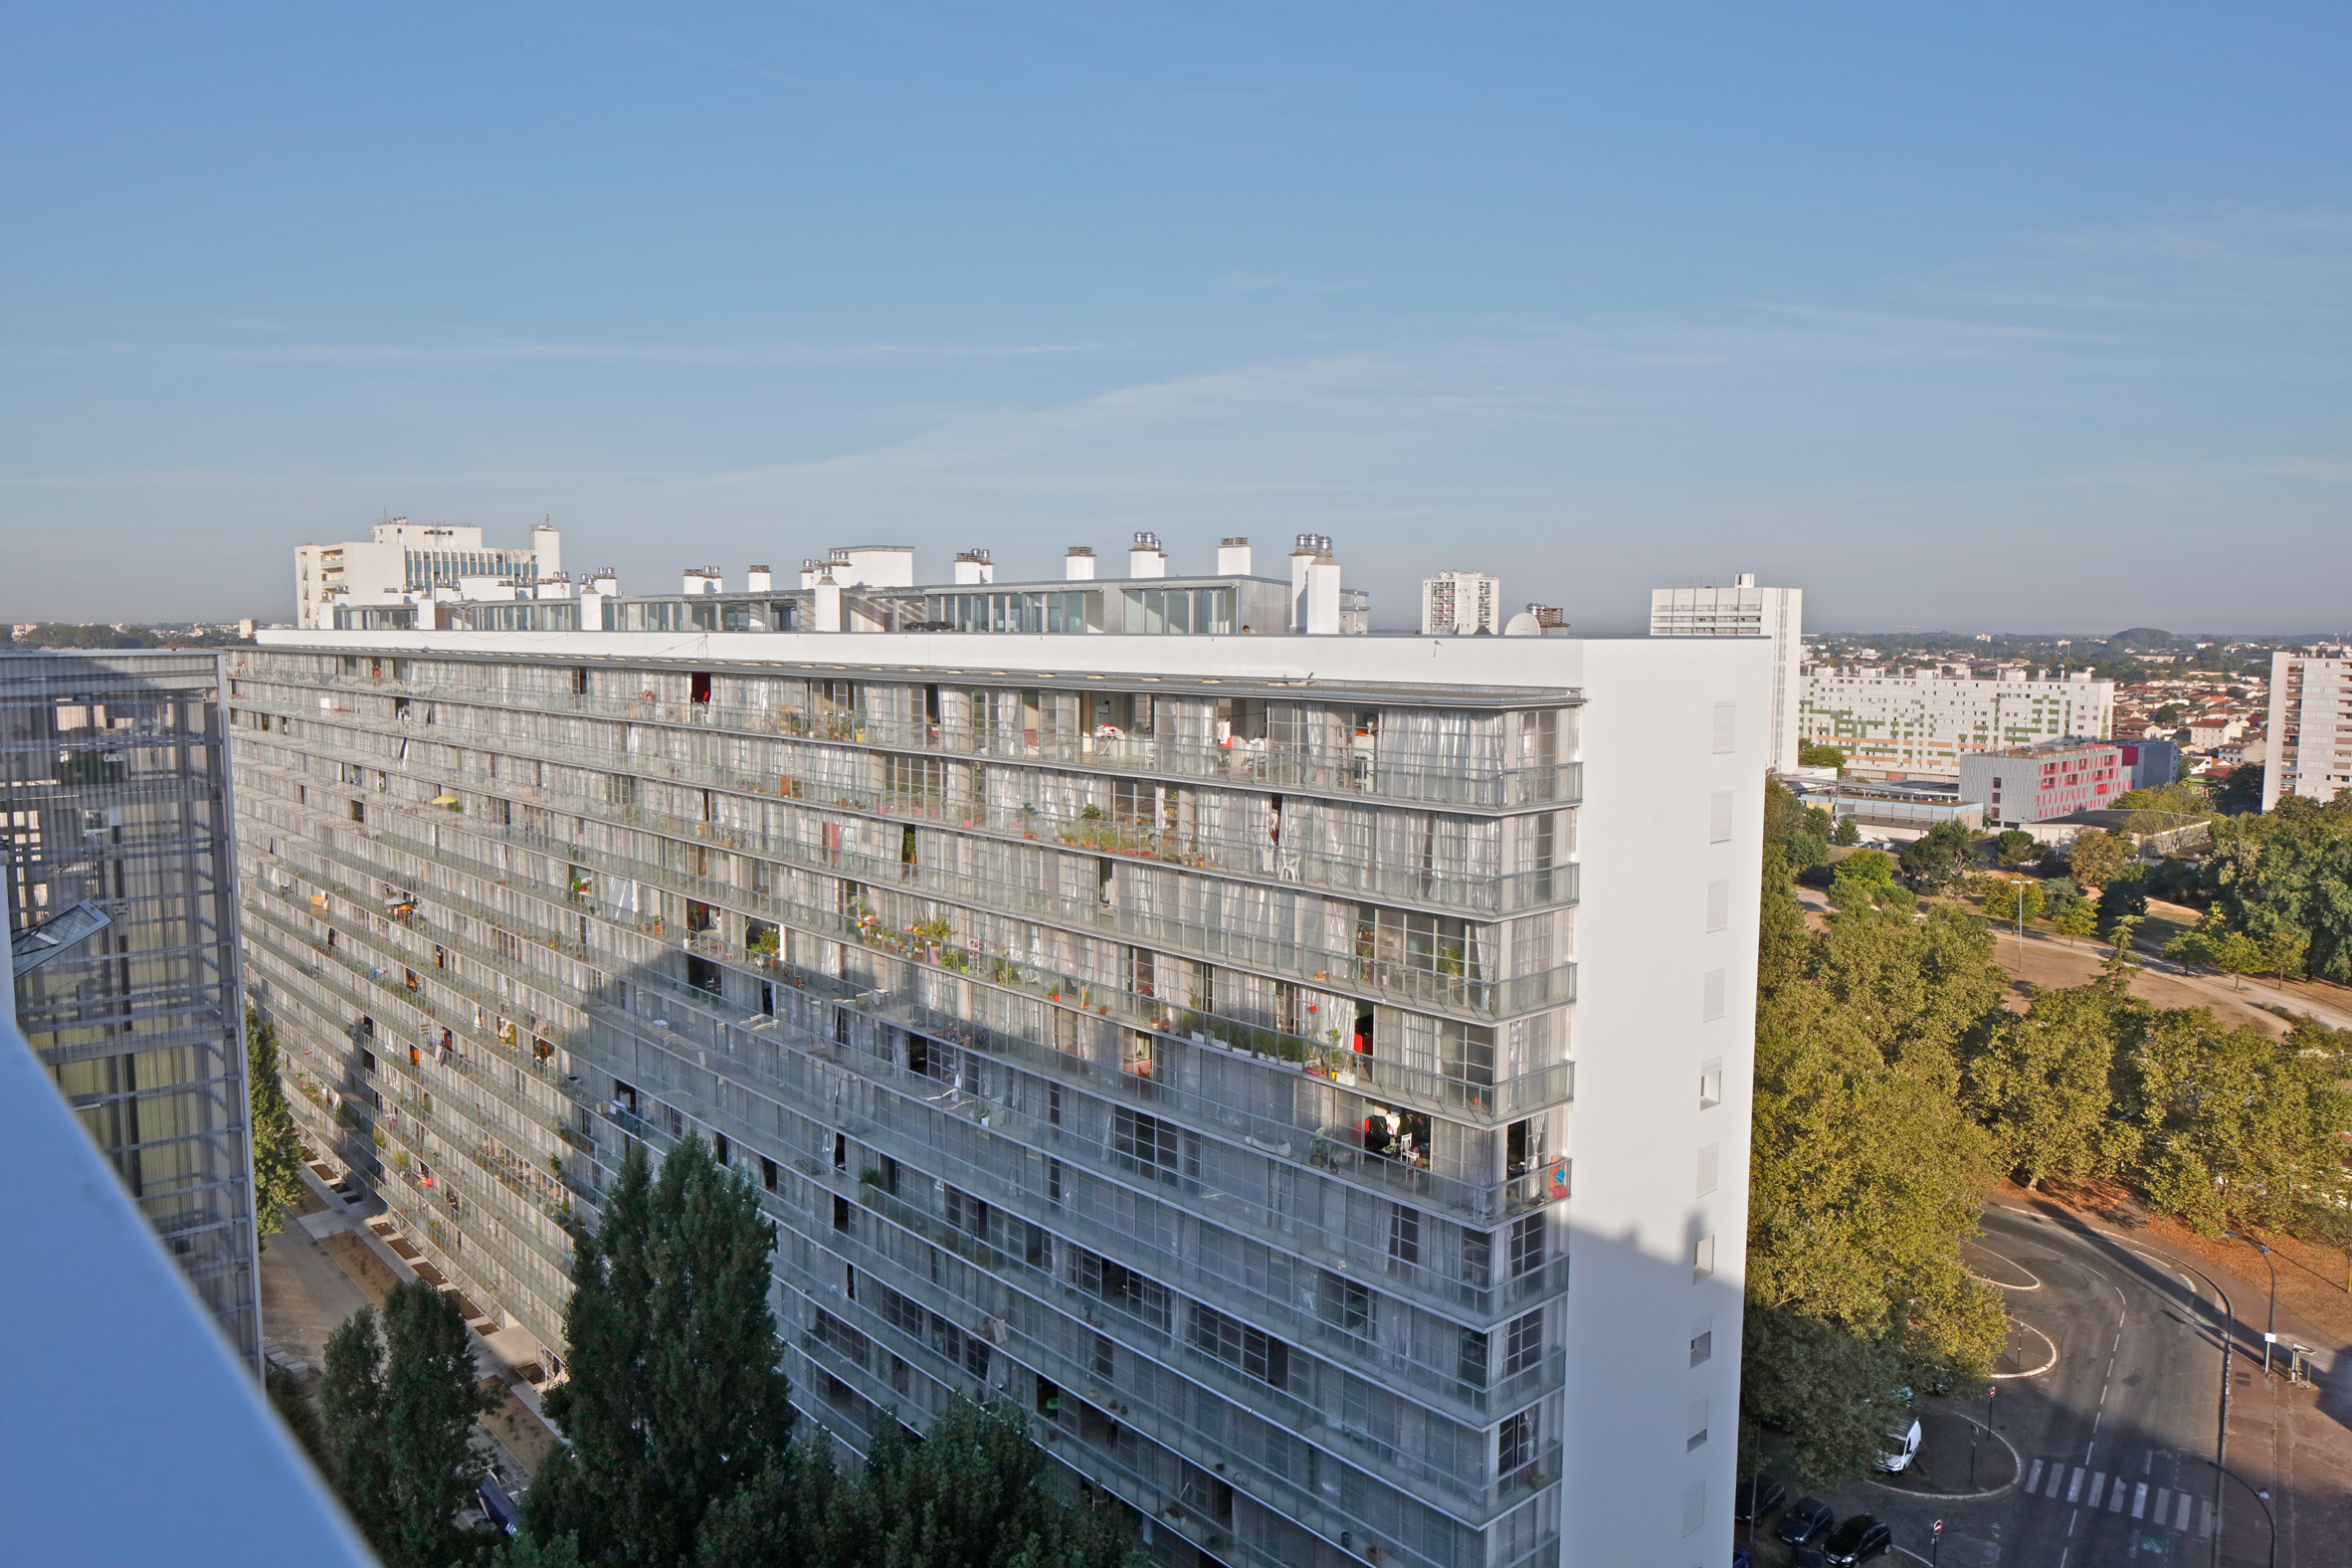 Frédéric-Druot-Architecture-Lacaton-Vassal-Architectes-Christophe-Hutin-Architecture-transformation-of-530-dwellings-mies-van-der-rohe-award-2019-winner-_dezeen_2364_col_9